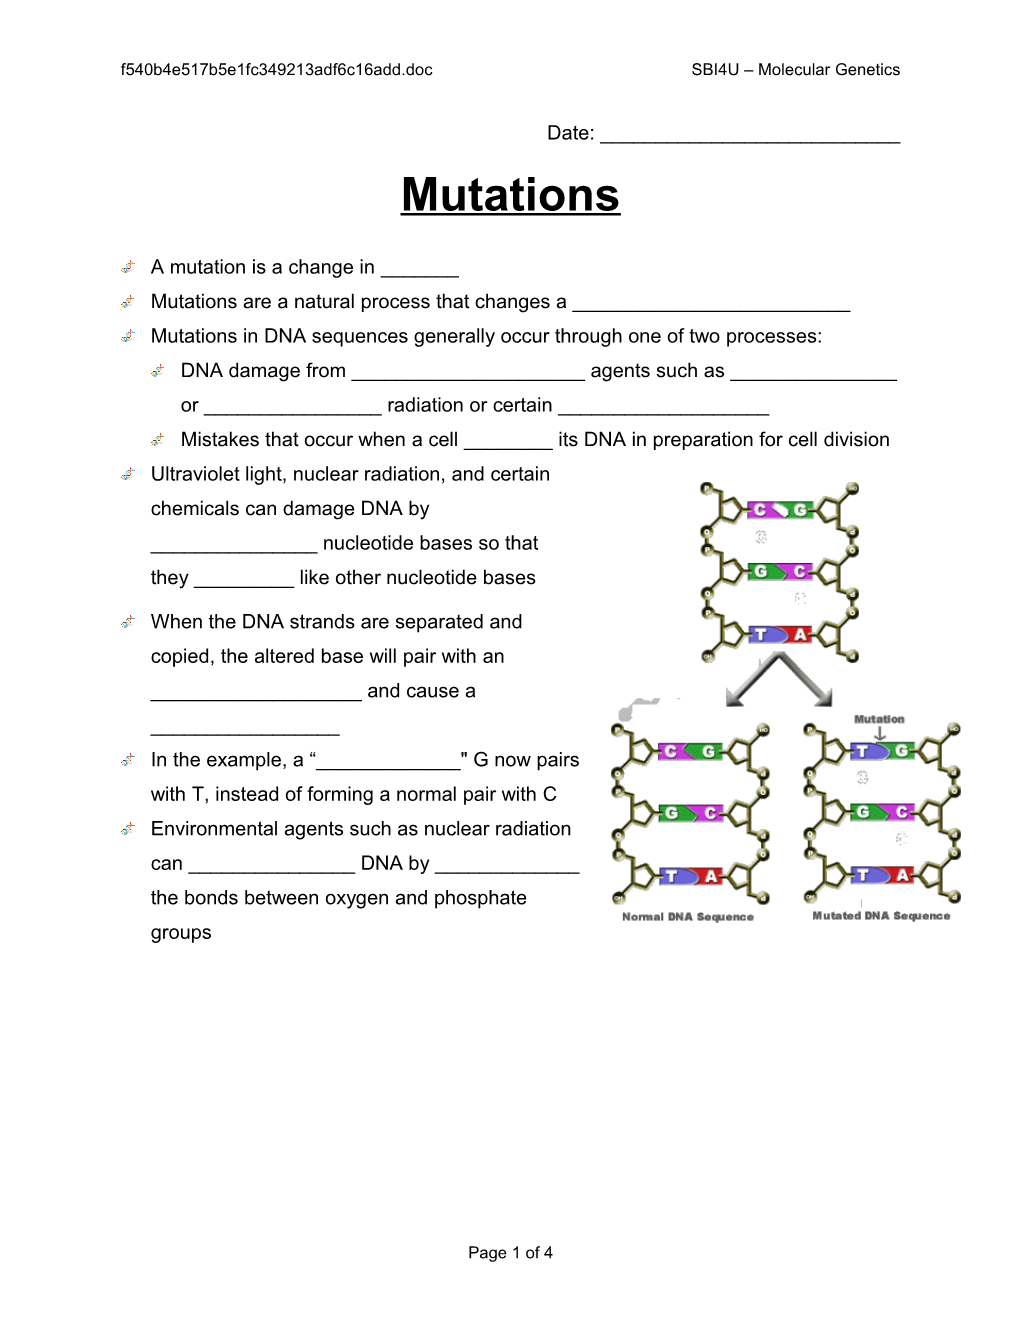 8 - Mutations SBI4U Molecular Genetics